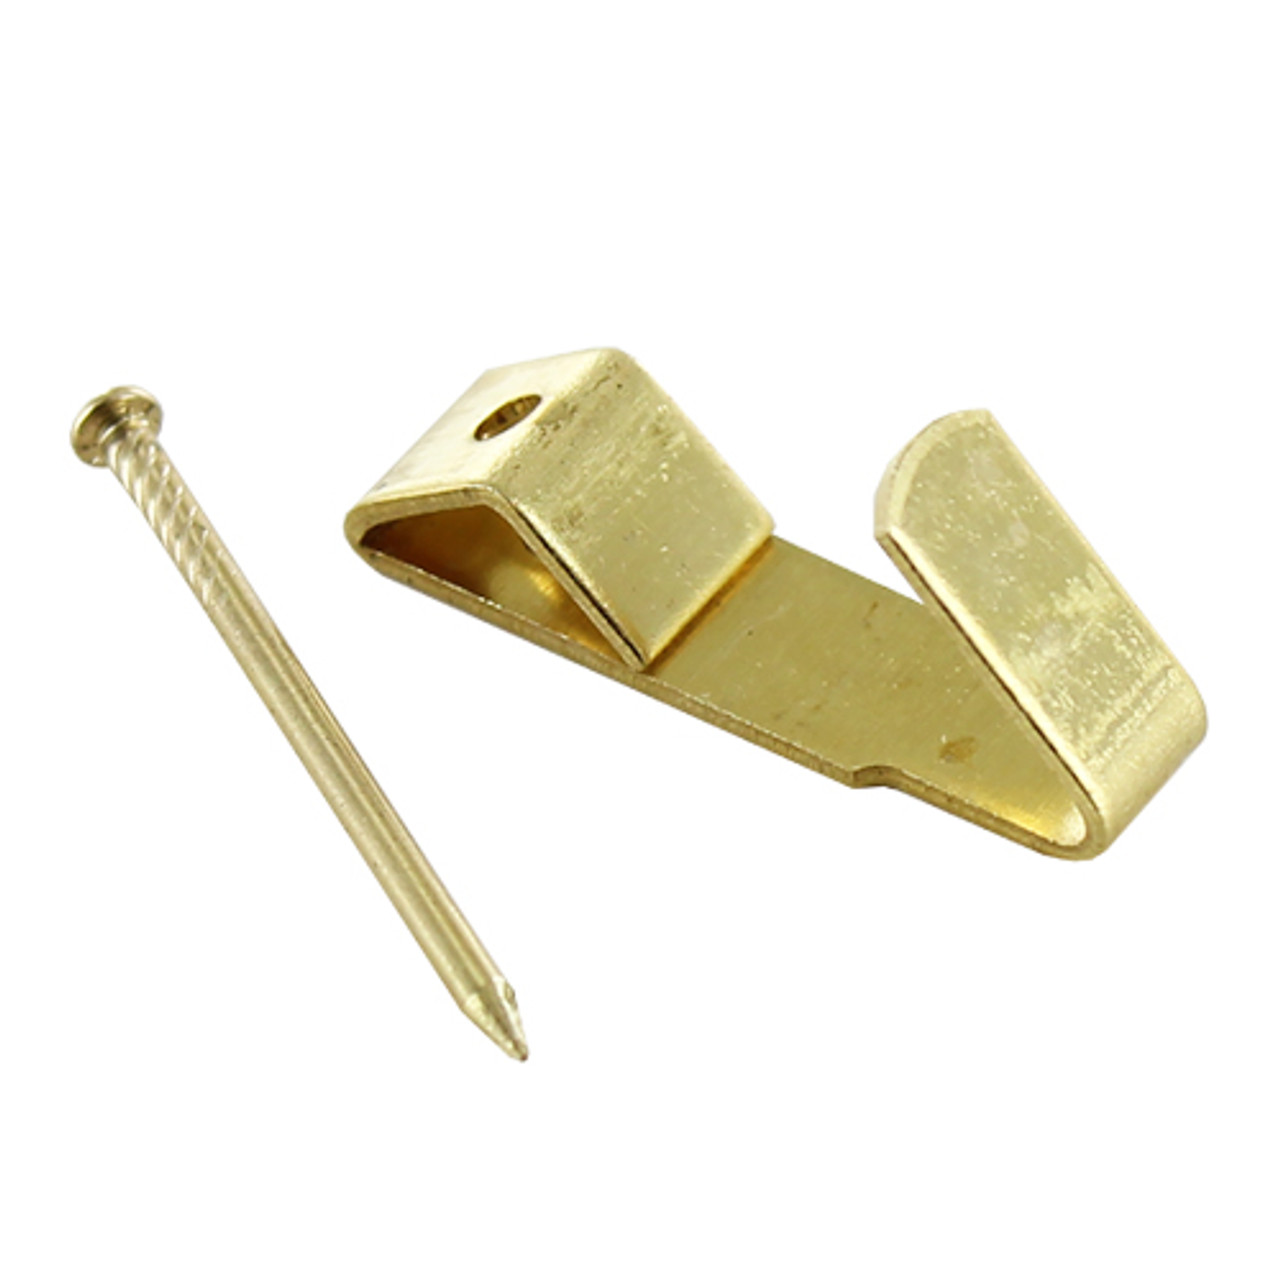 I00-0001 Wall Hook Brass No1 Qty 100 - Mainline Mouldings Ltd